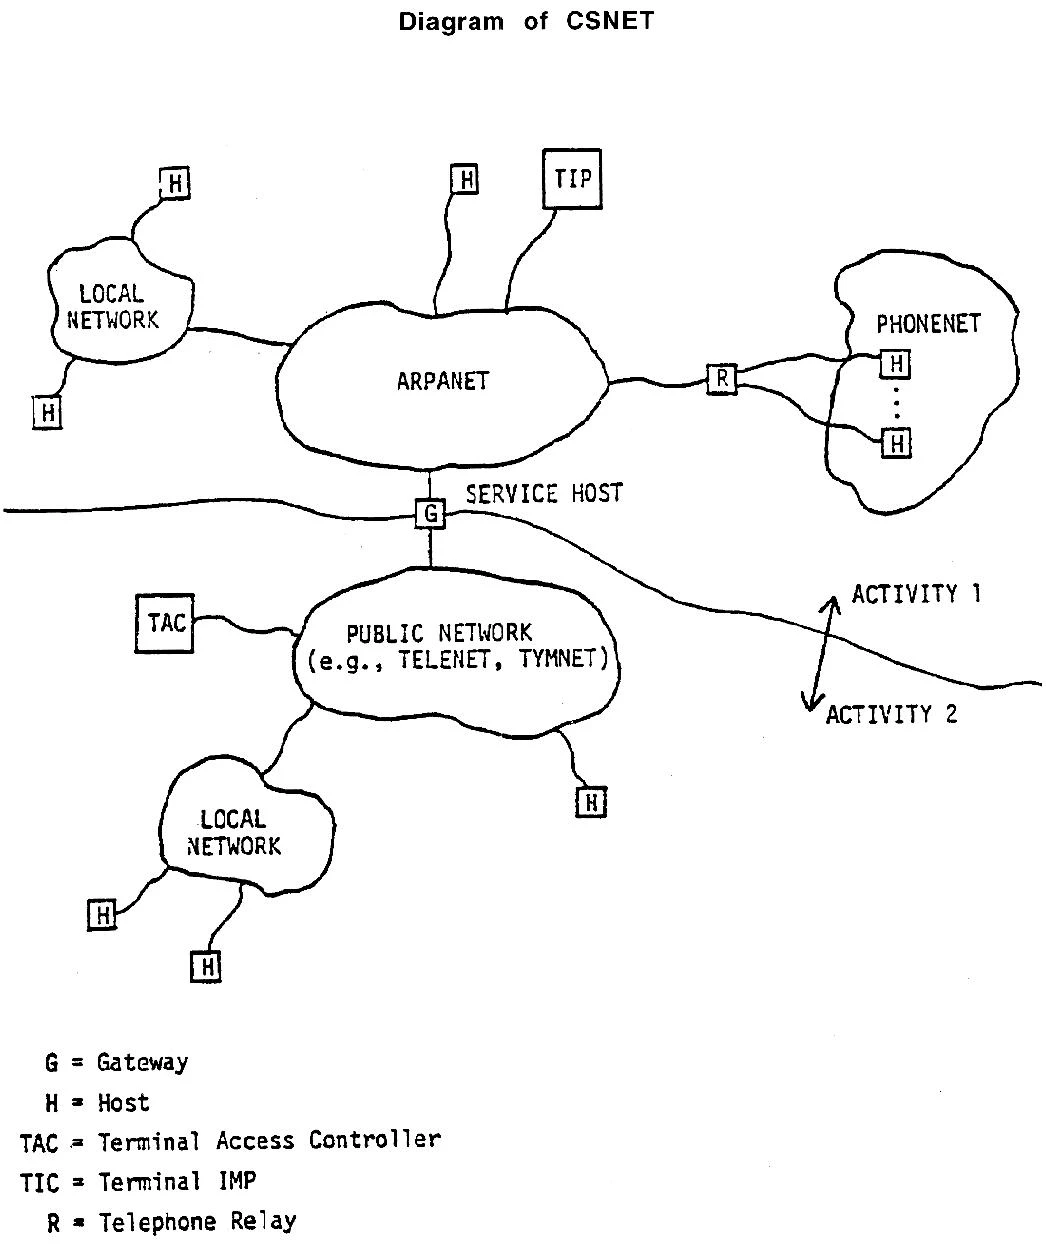 Diagram of CSNET.